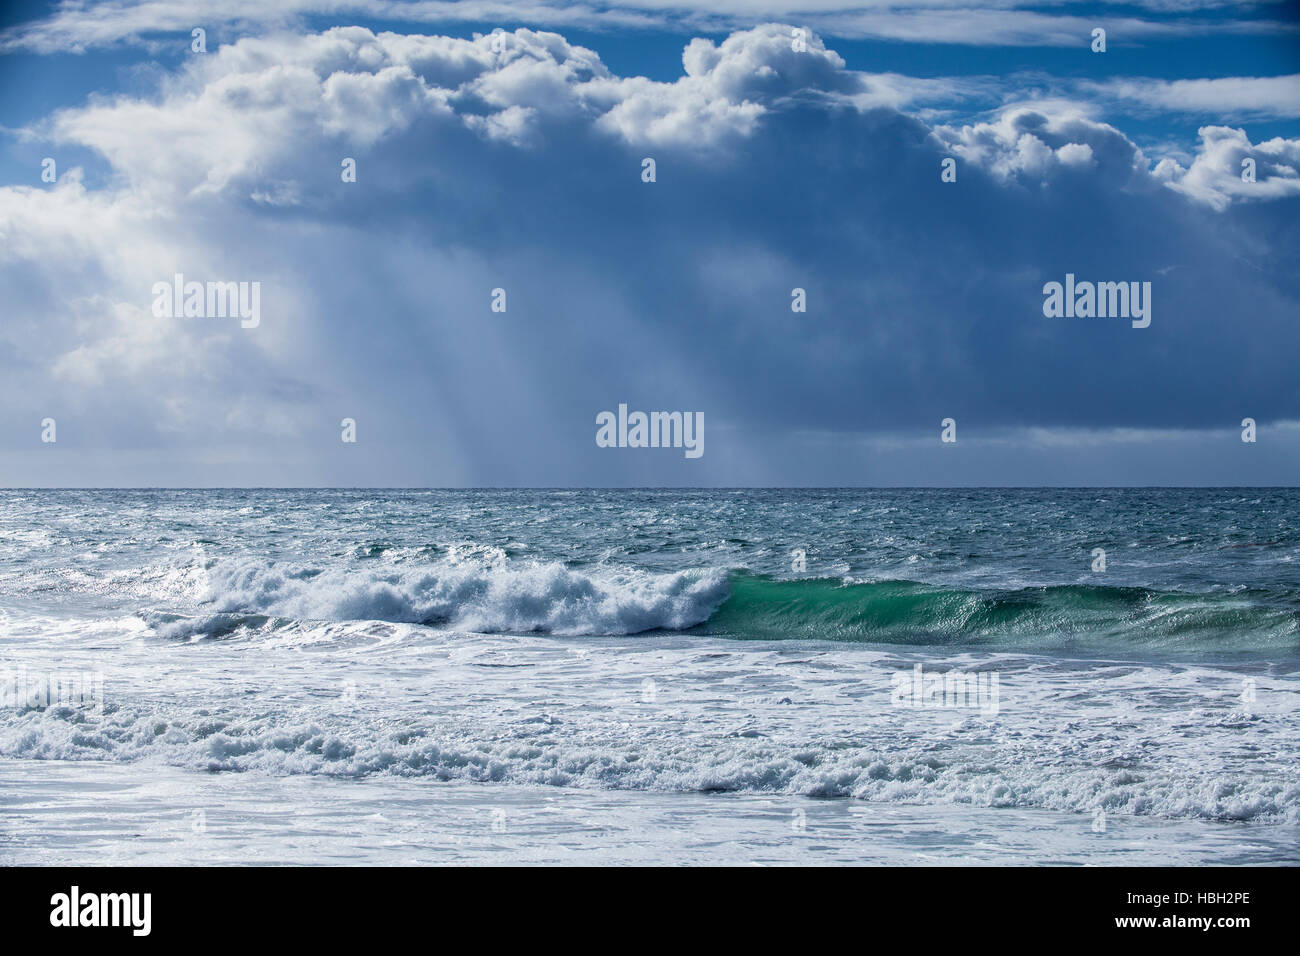 storm surf and rain clouds with rays of sunlight poking through, Hendry's Beach, Santa Barbara, California Stock Photo